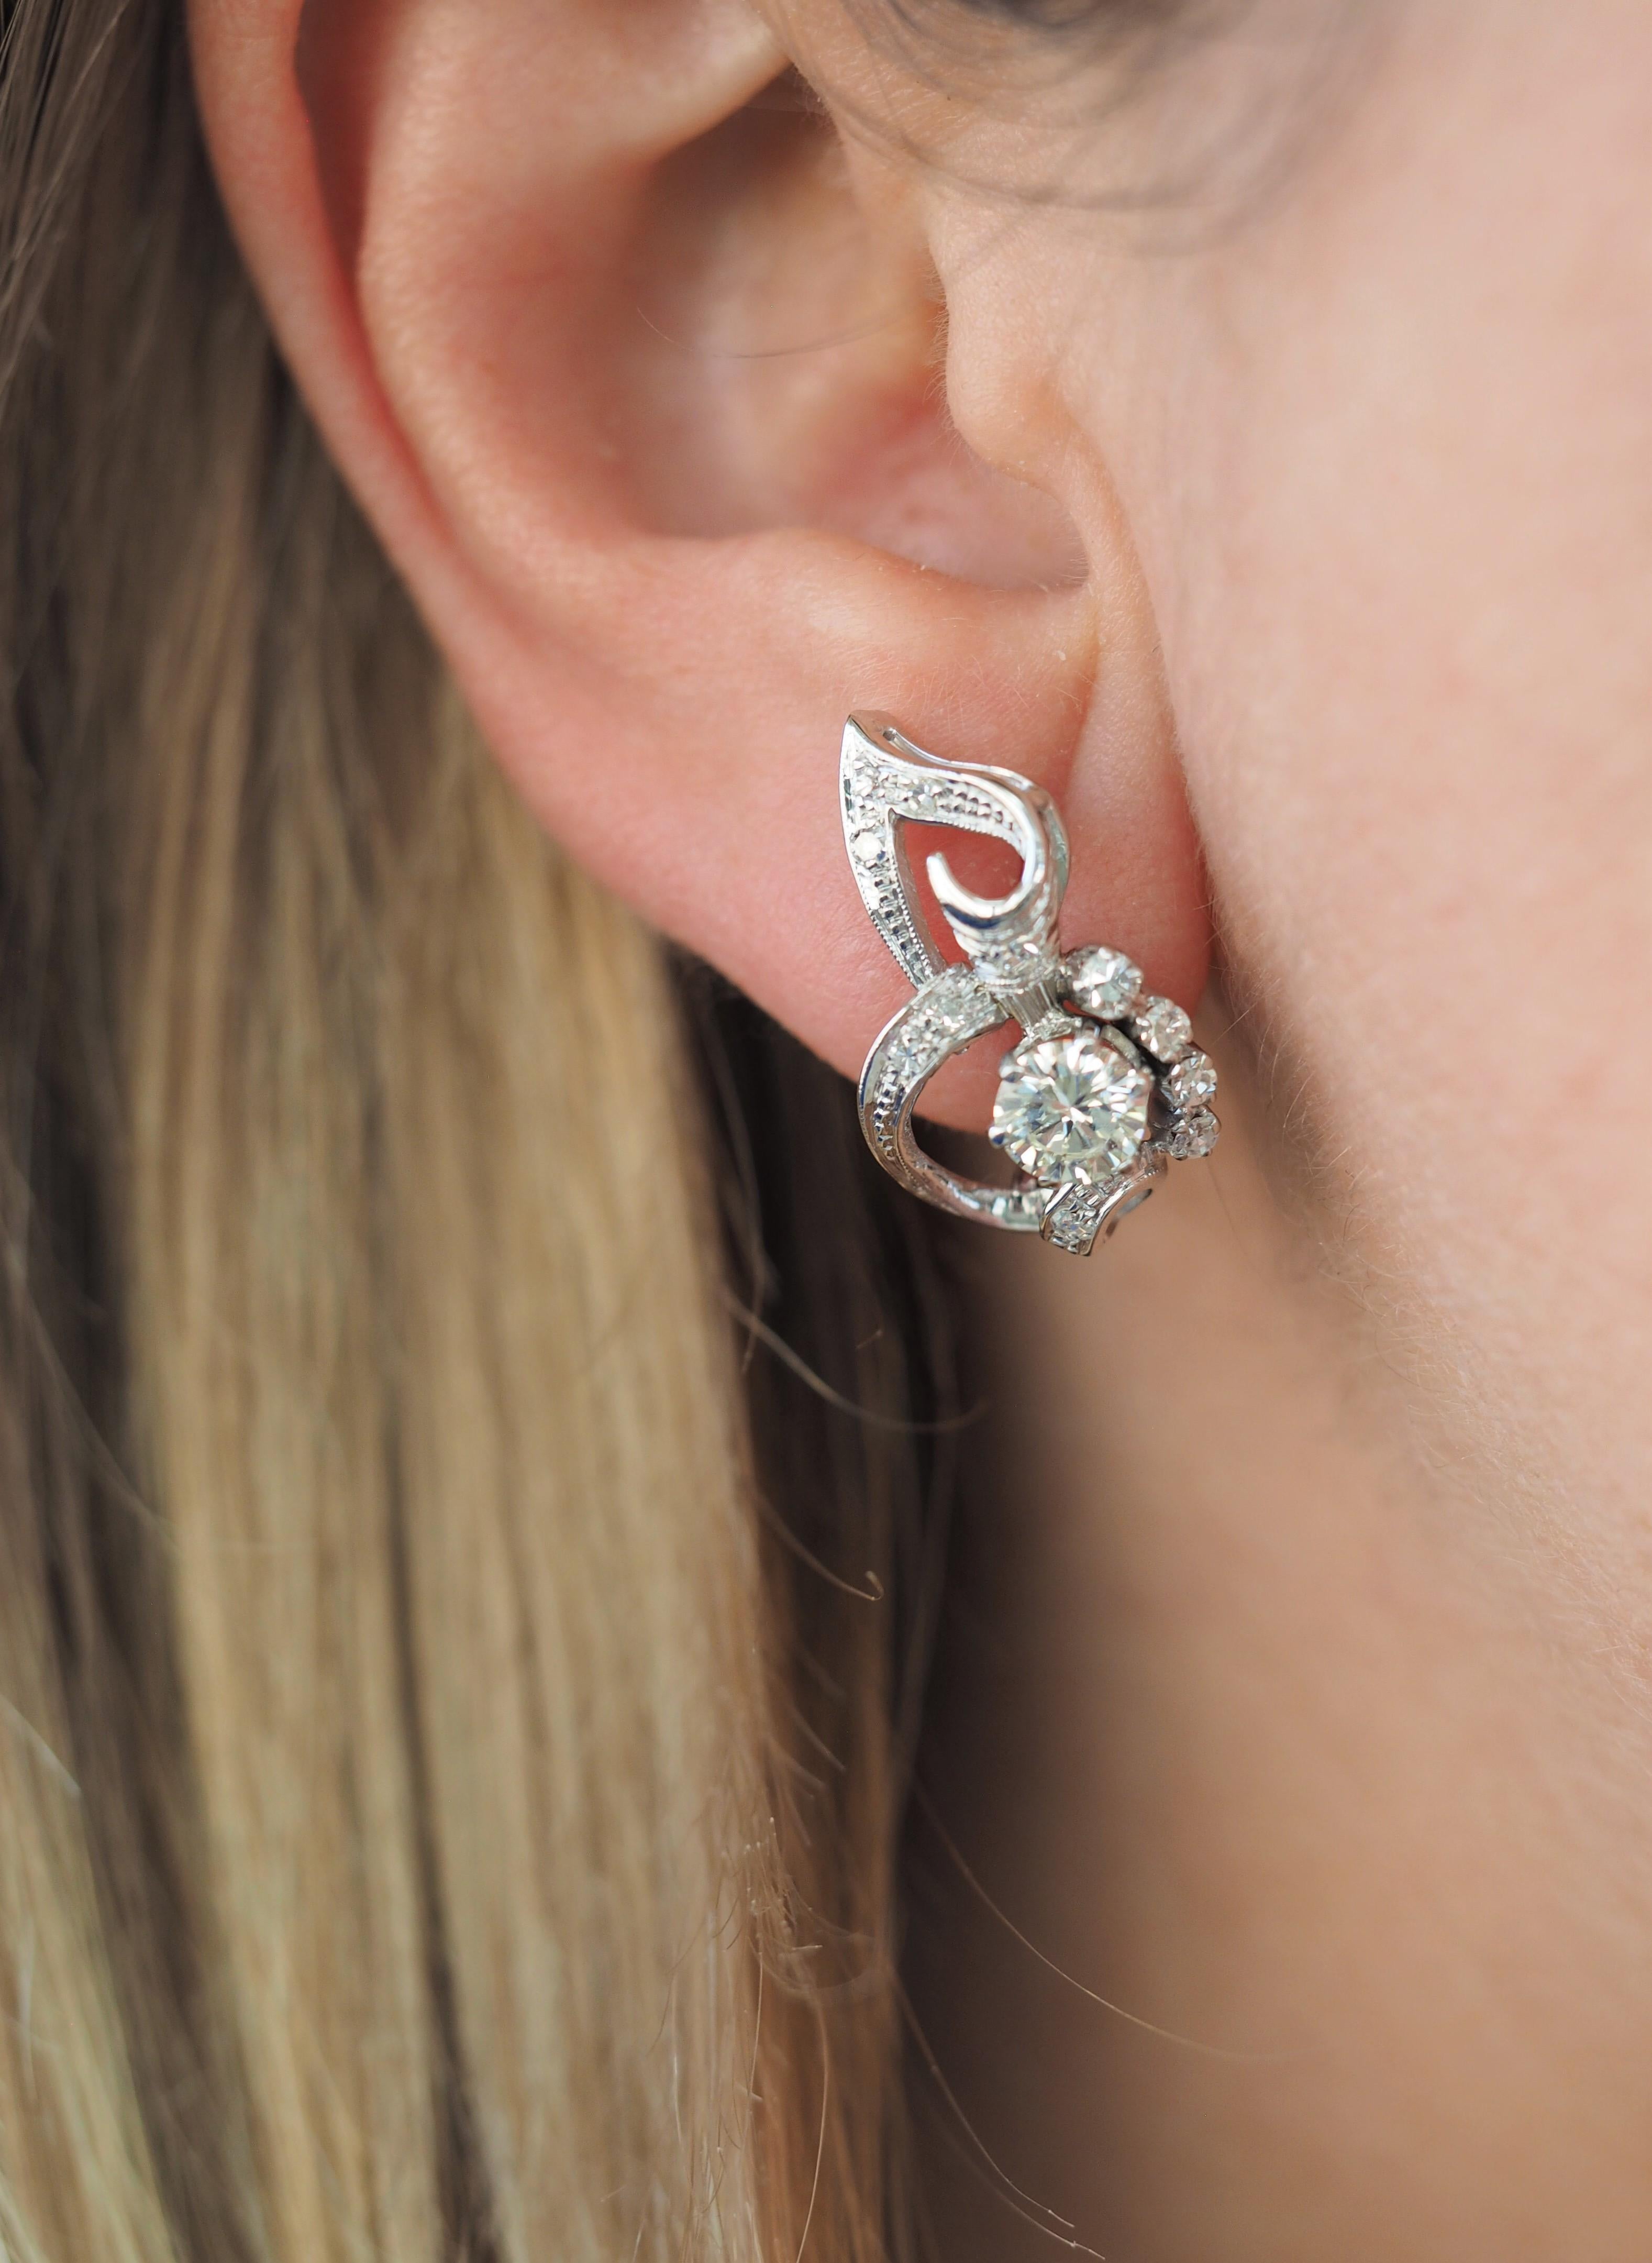 Vintage Antique 18 Karat White Gold Round Diamond Flower Earrings. 
Earrings weigh 5.6 grams. Dimensions 12.6 x 20.6 x 5.4 mm.

Earring Details:
Metal: 18K White Gold
Weight 5.6 grams 
Dimensions: 12.6 x 20.6 x 5.4 mm
Stamped:  None 

Diamond